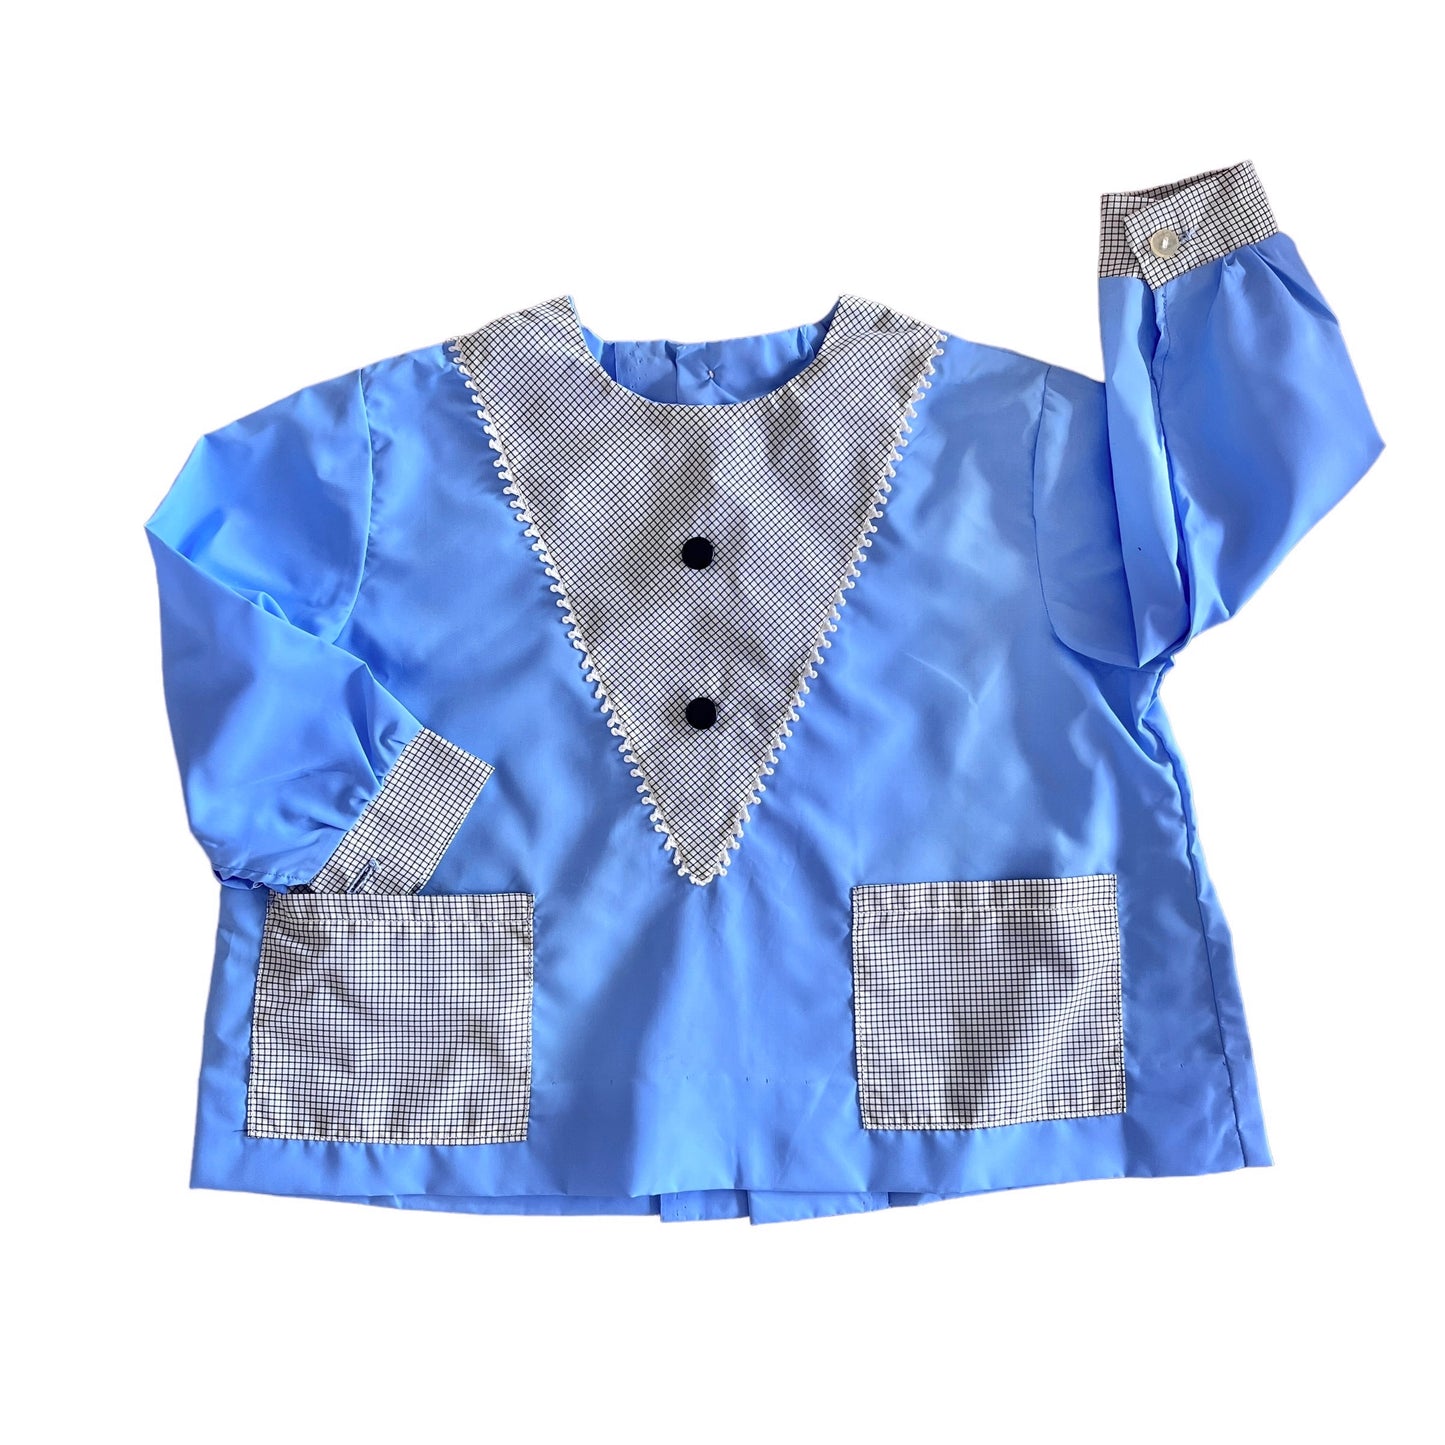 1960s Blue Toddler Nylon Shirt / Blouse / 9-12 Months